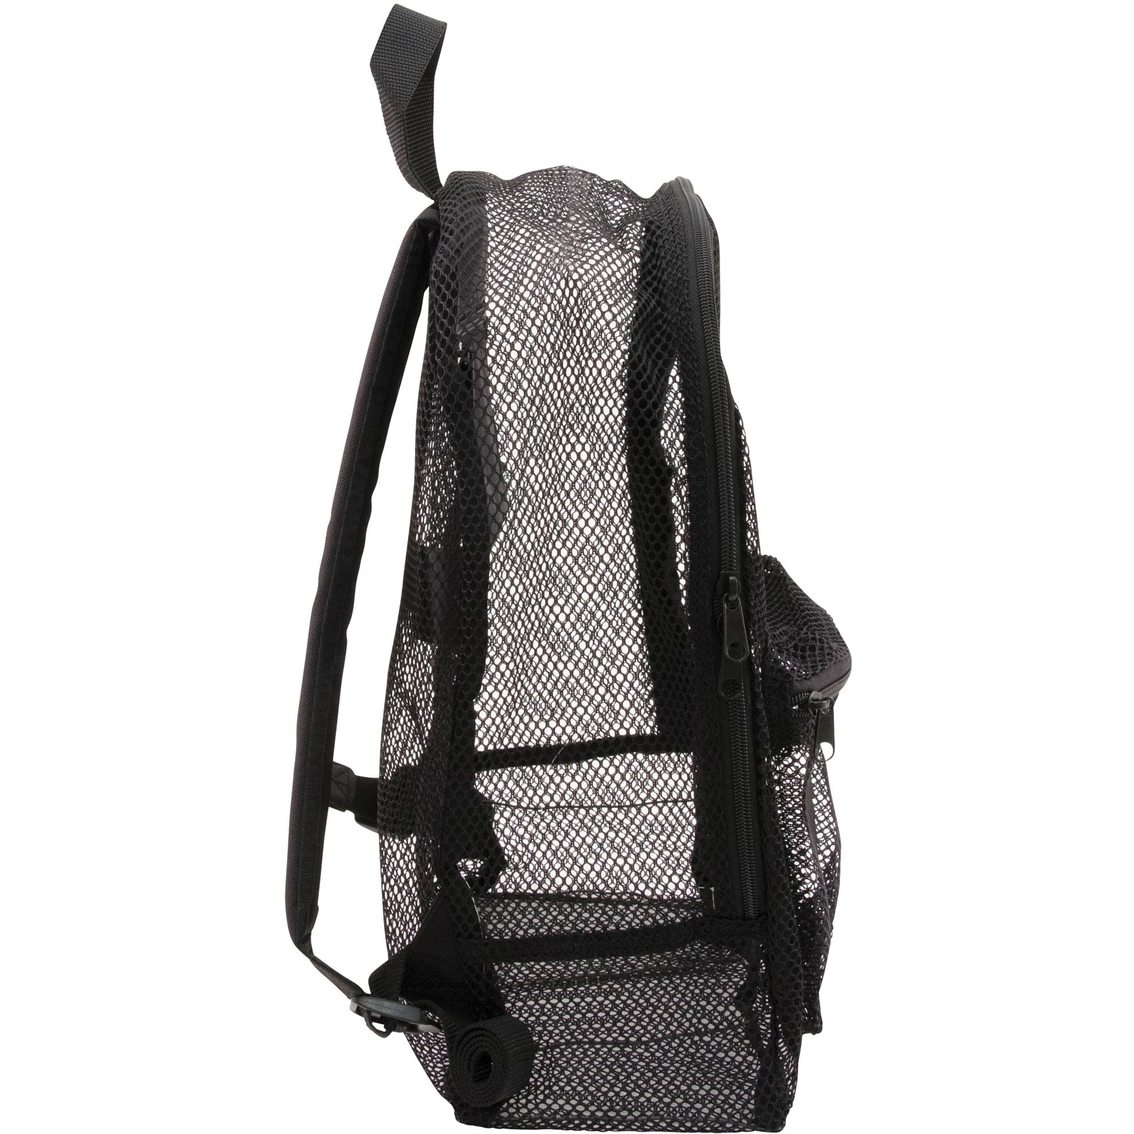 Mercury Luggage Mesh Backpack - Image 3 of 3